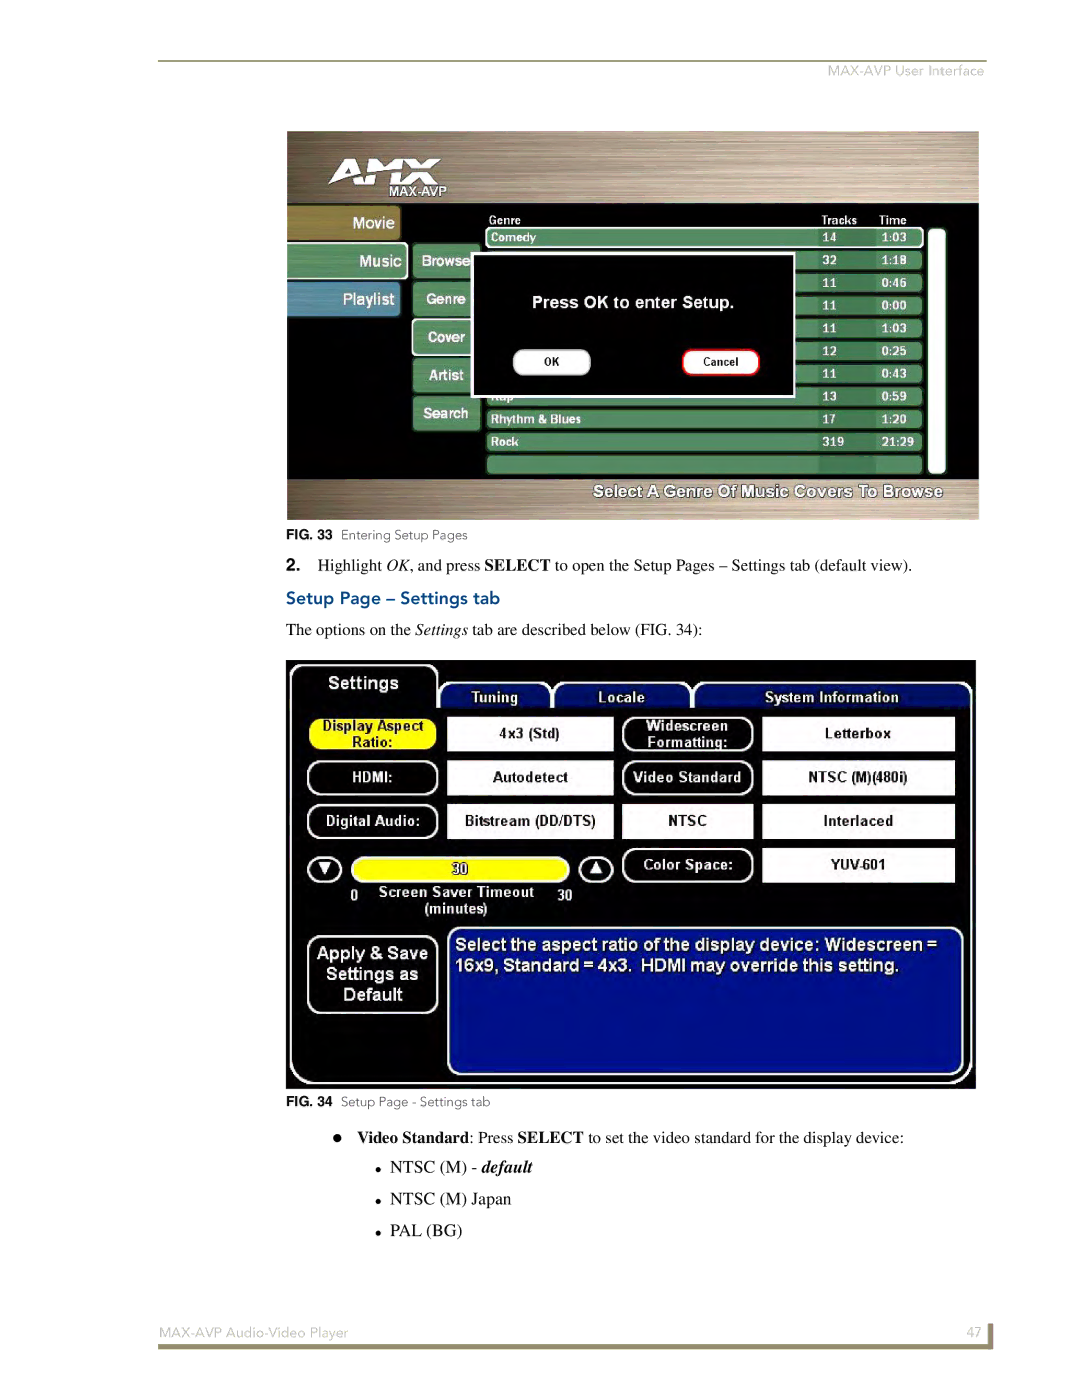 Arkon MAX-AVP manual Setup Page Settings tab, Entering Setup Pages 